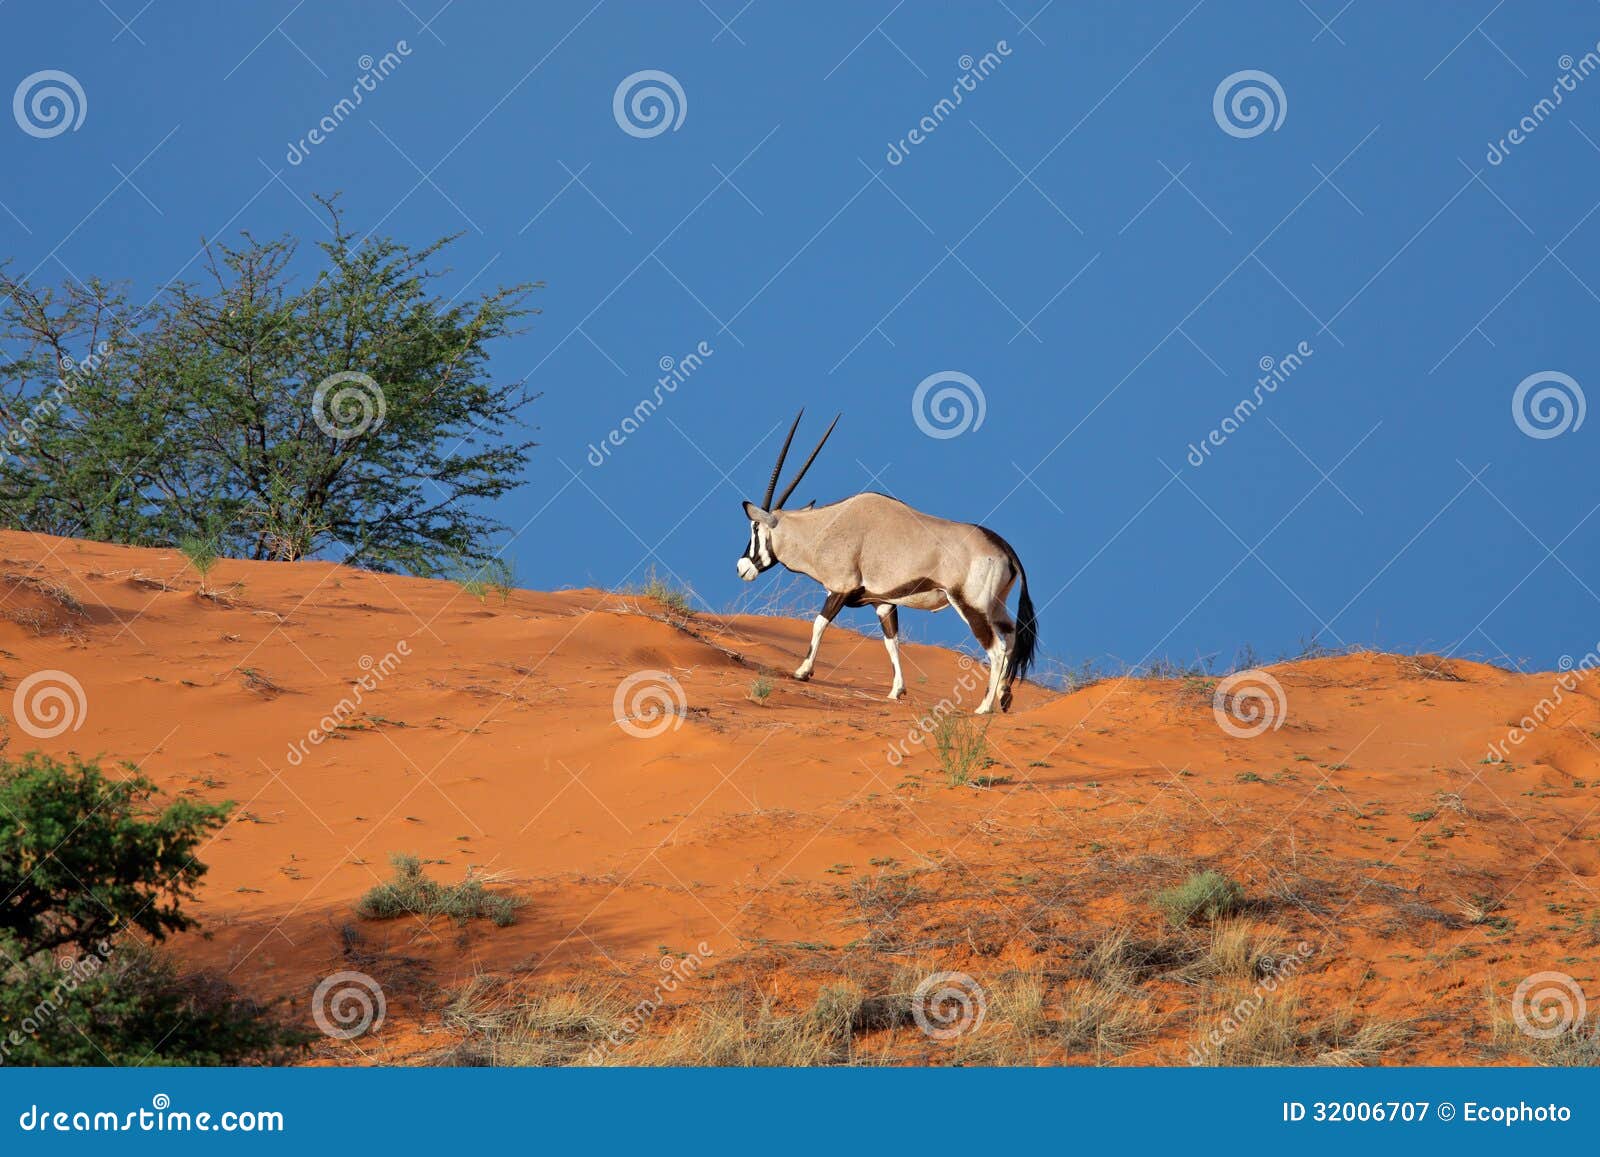 gemsbok antelope on sand dune